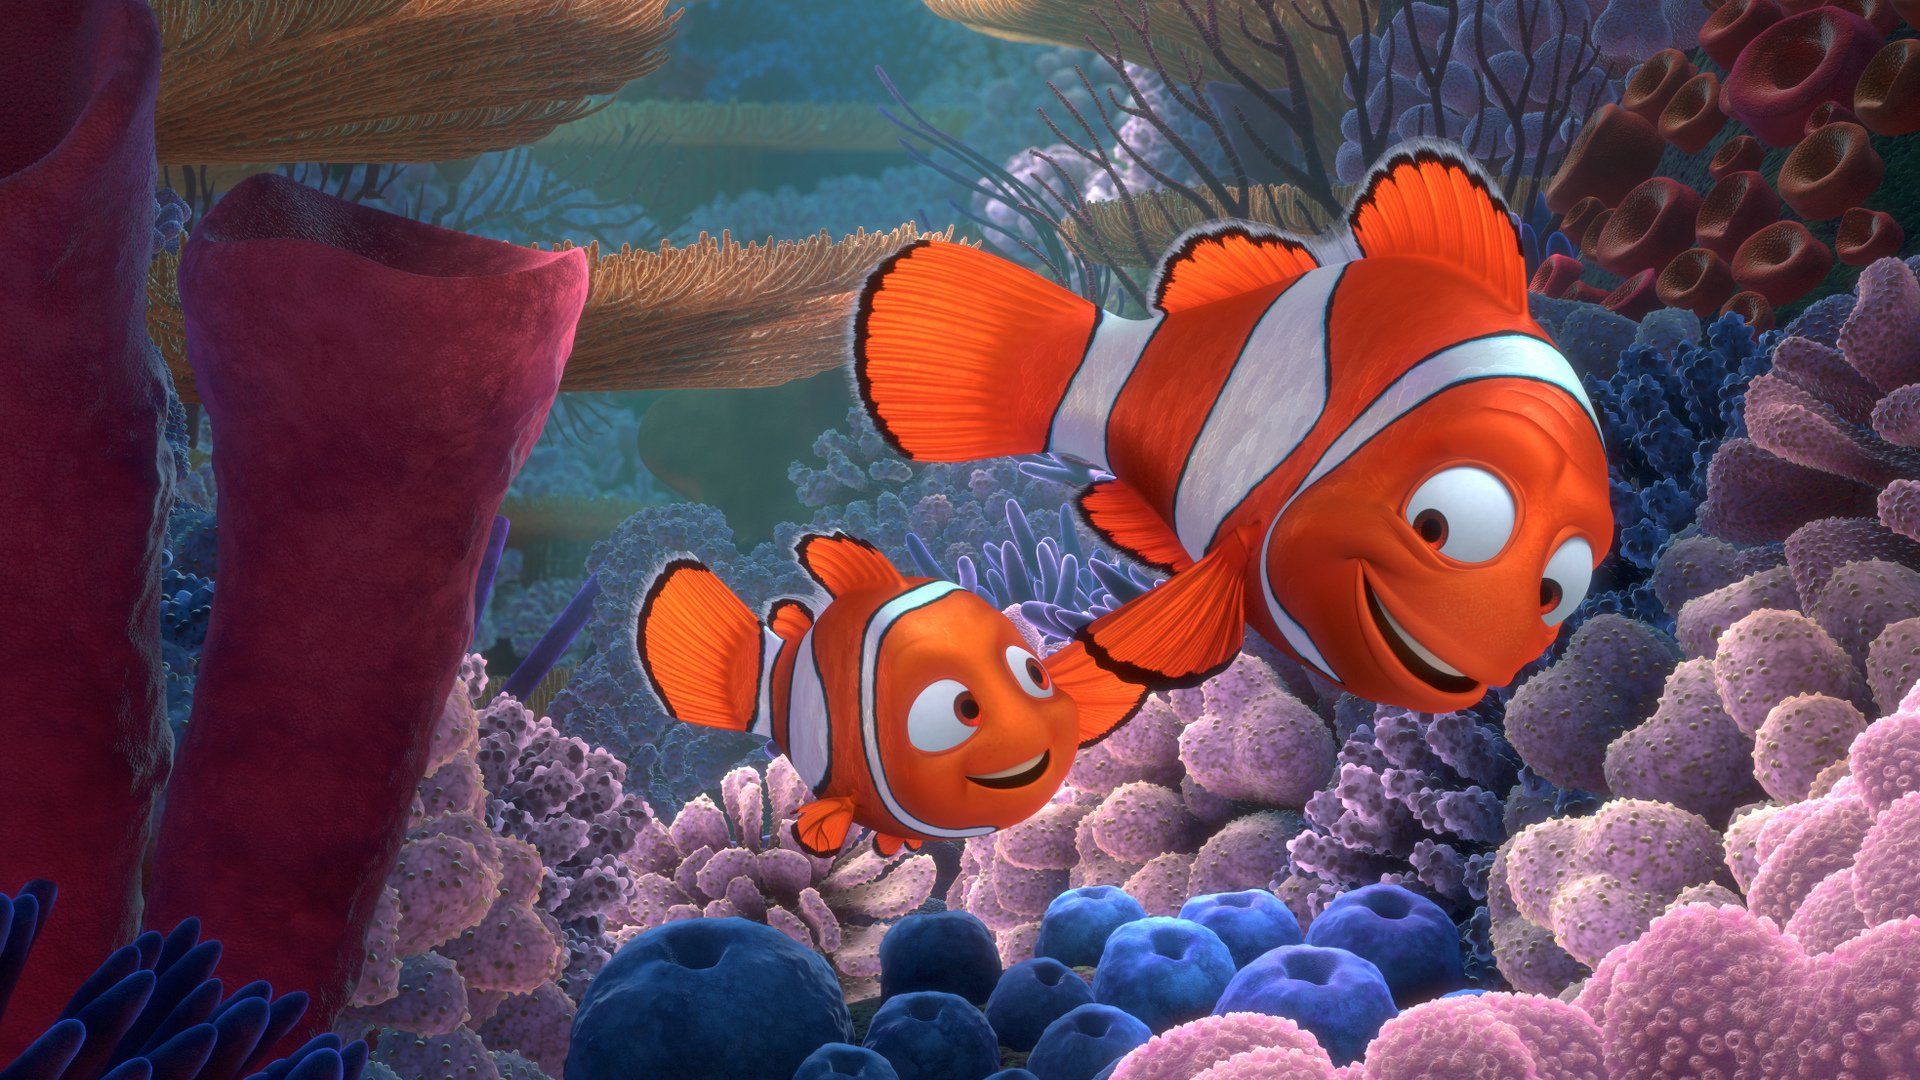 Cubierta de Buscando a Nemo